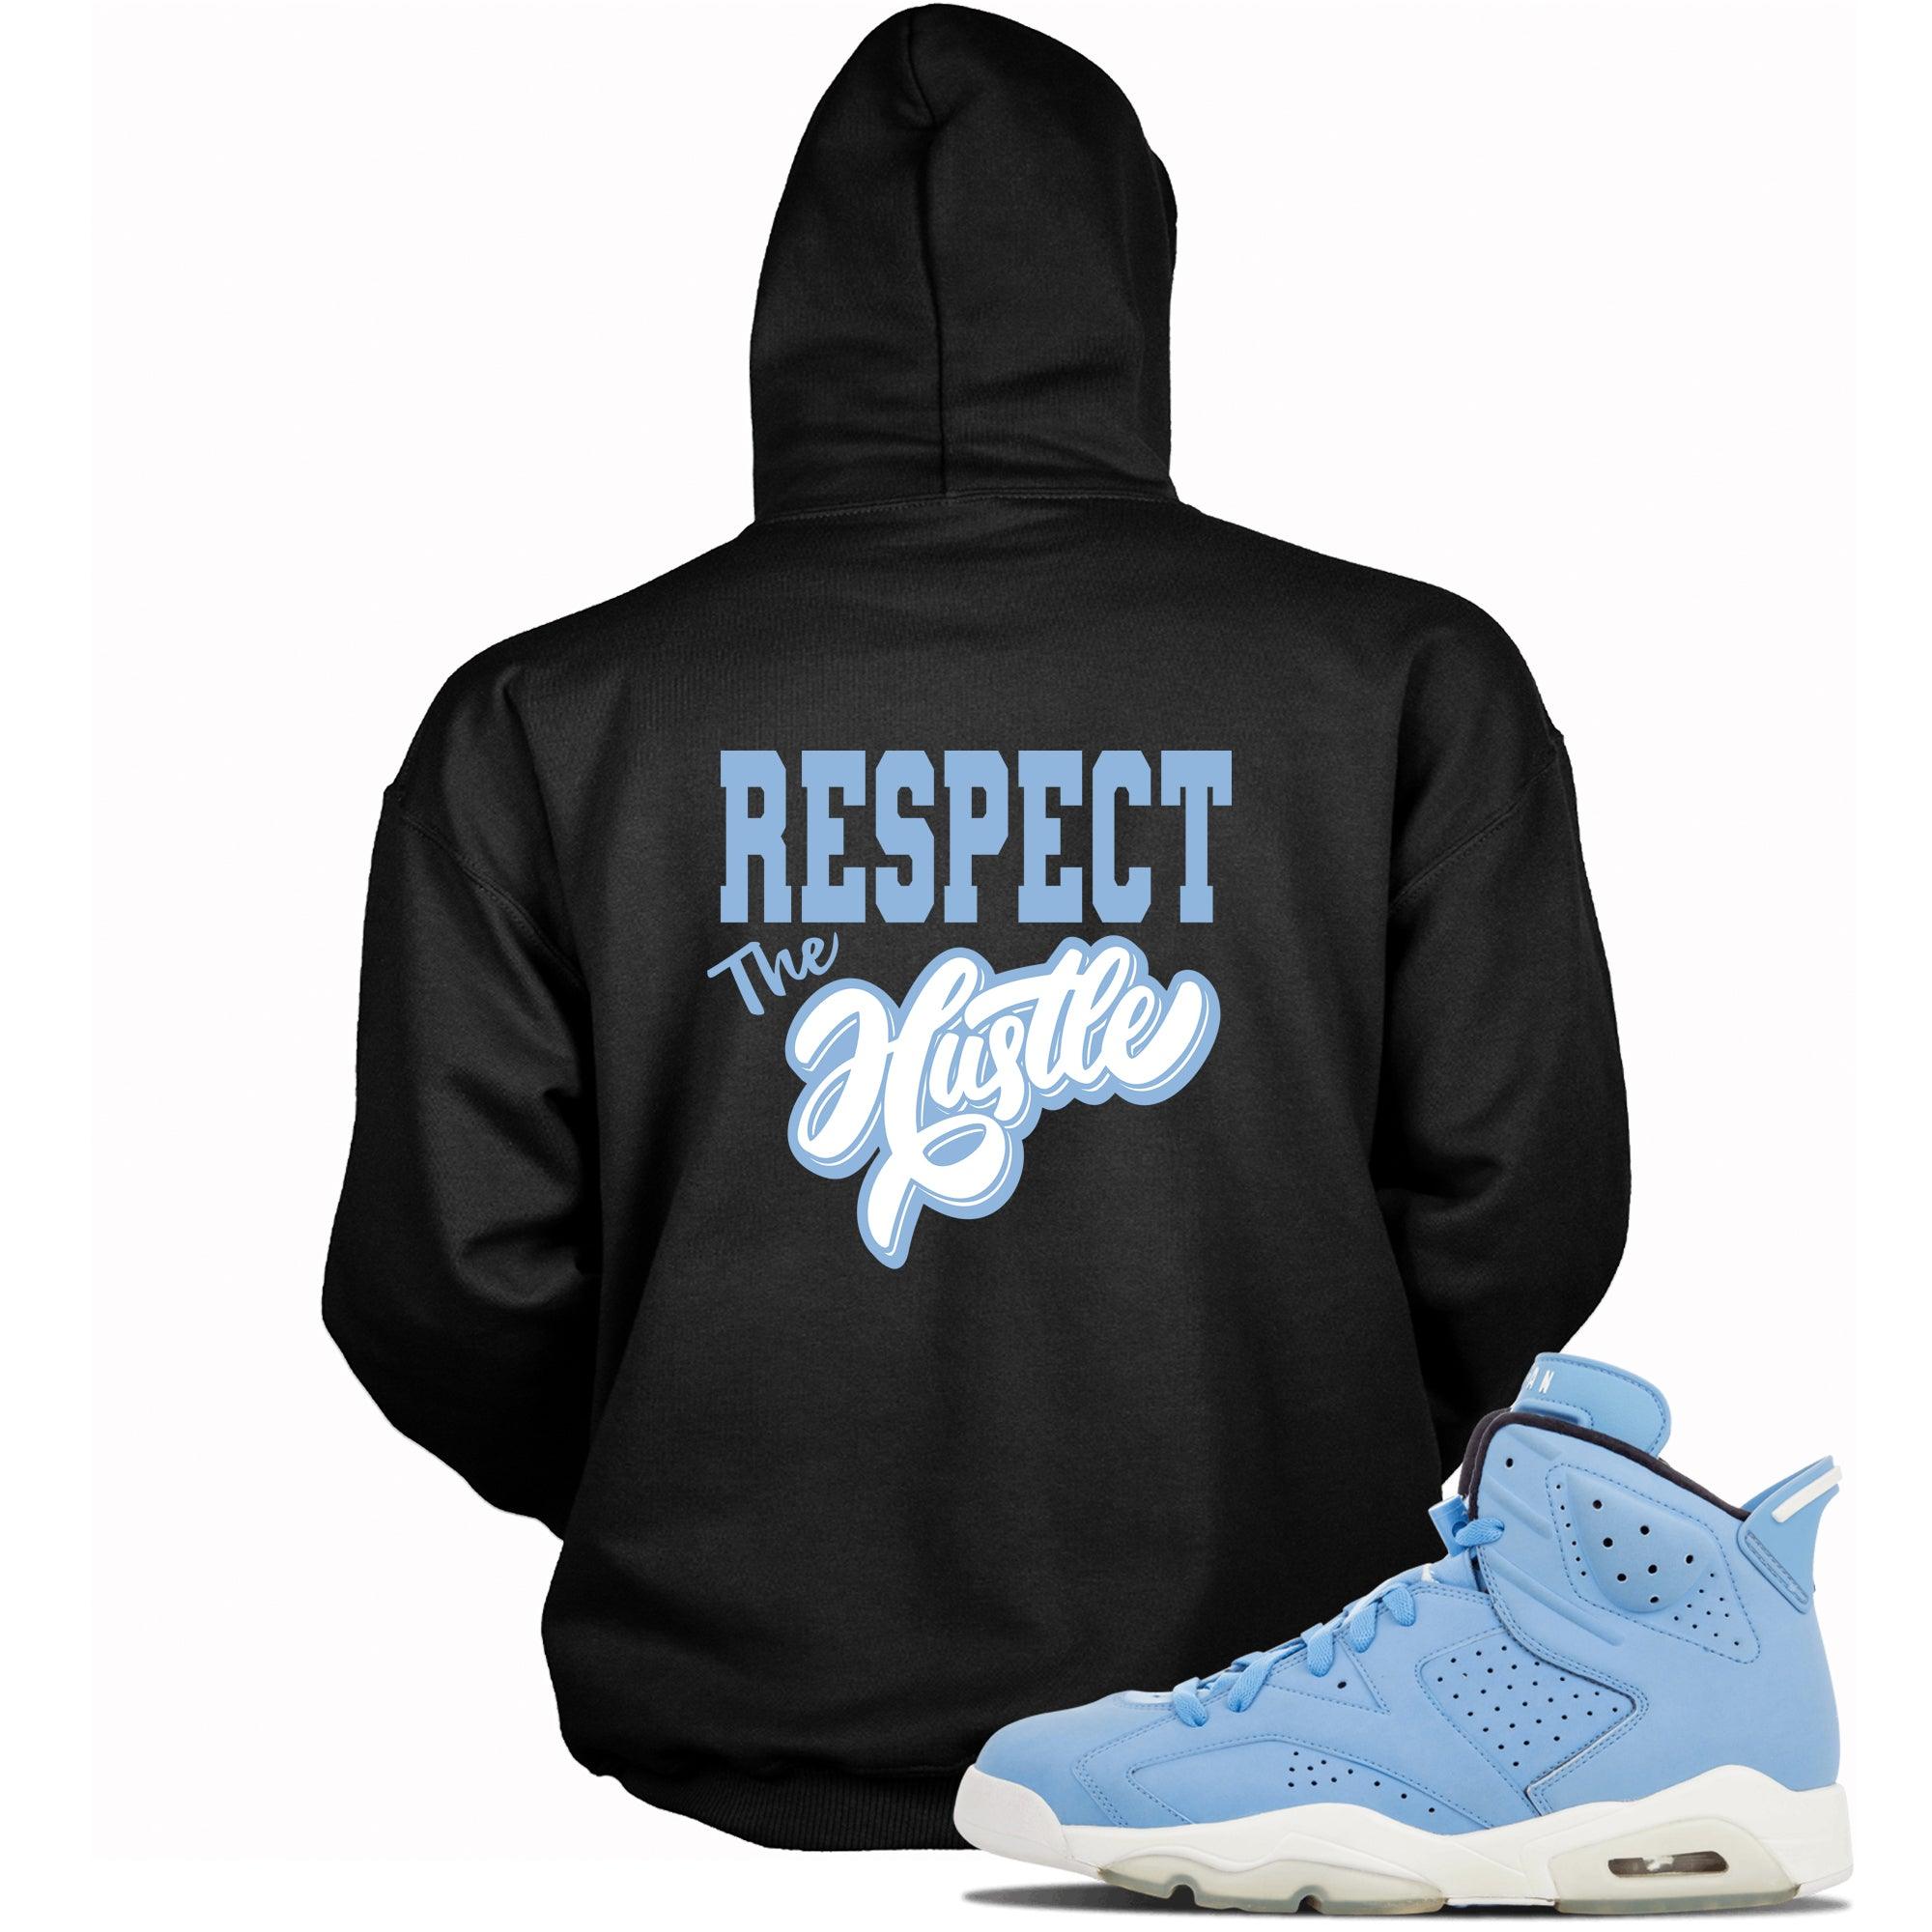 Black Respect The Hustle Hoodie AJ 6s Retro GG Still Blue photo